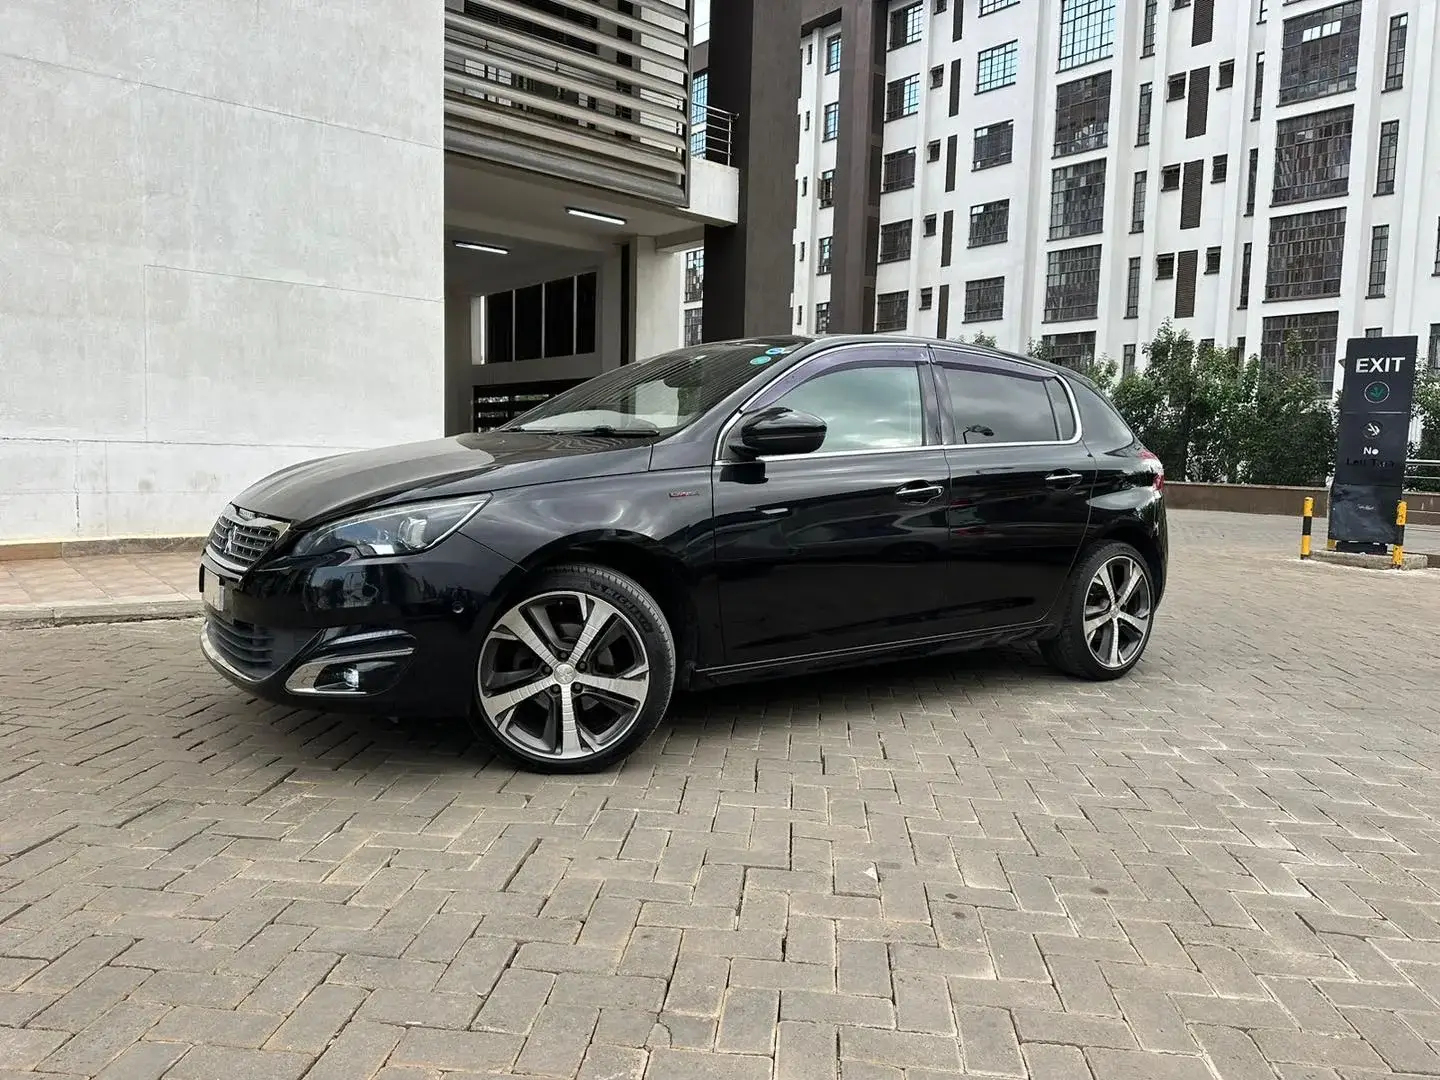 Peugeot 308 for Sale in Nairobi

